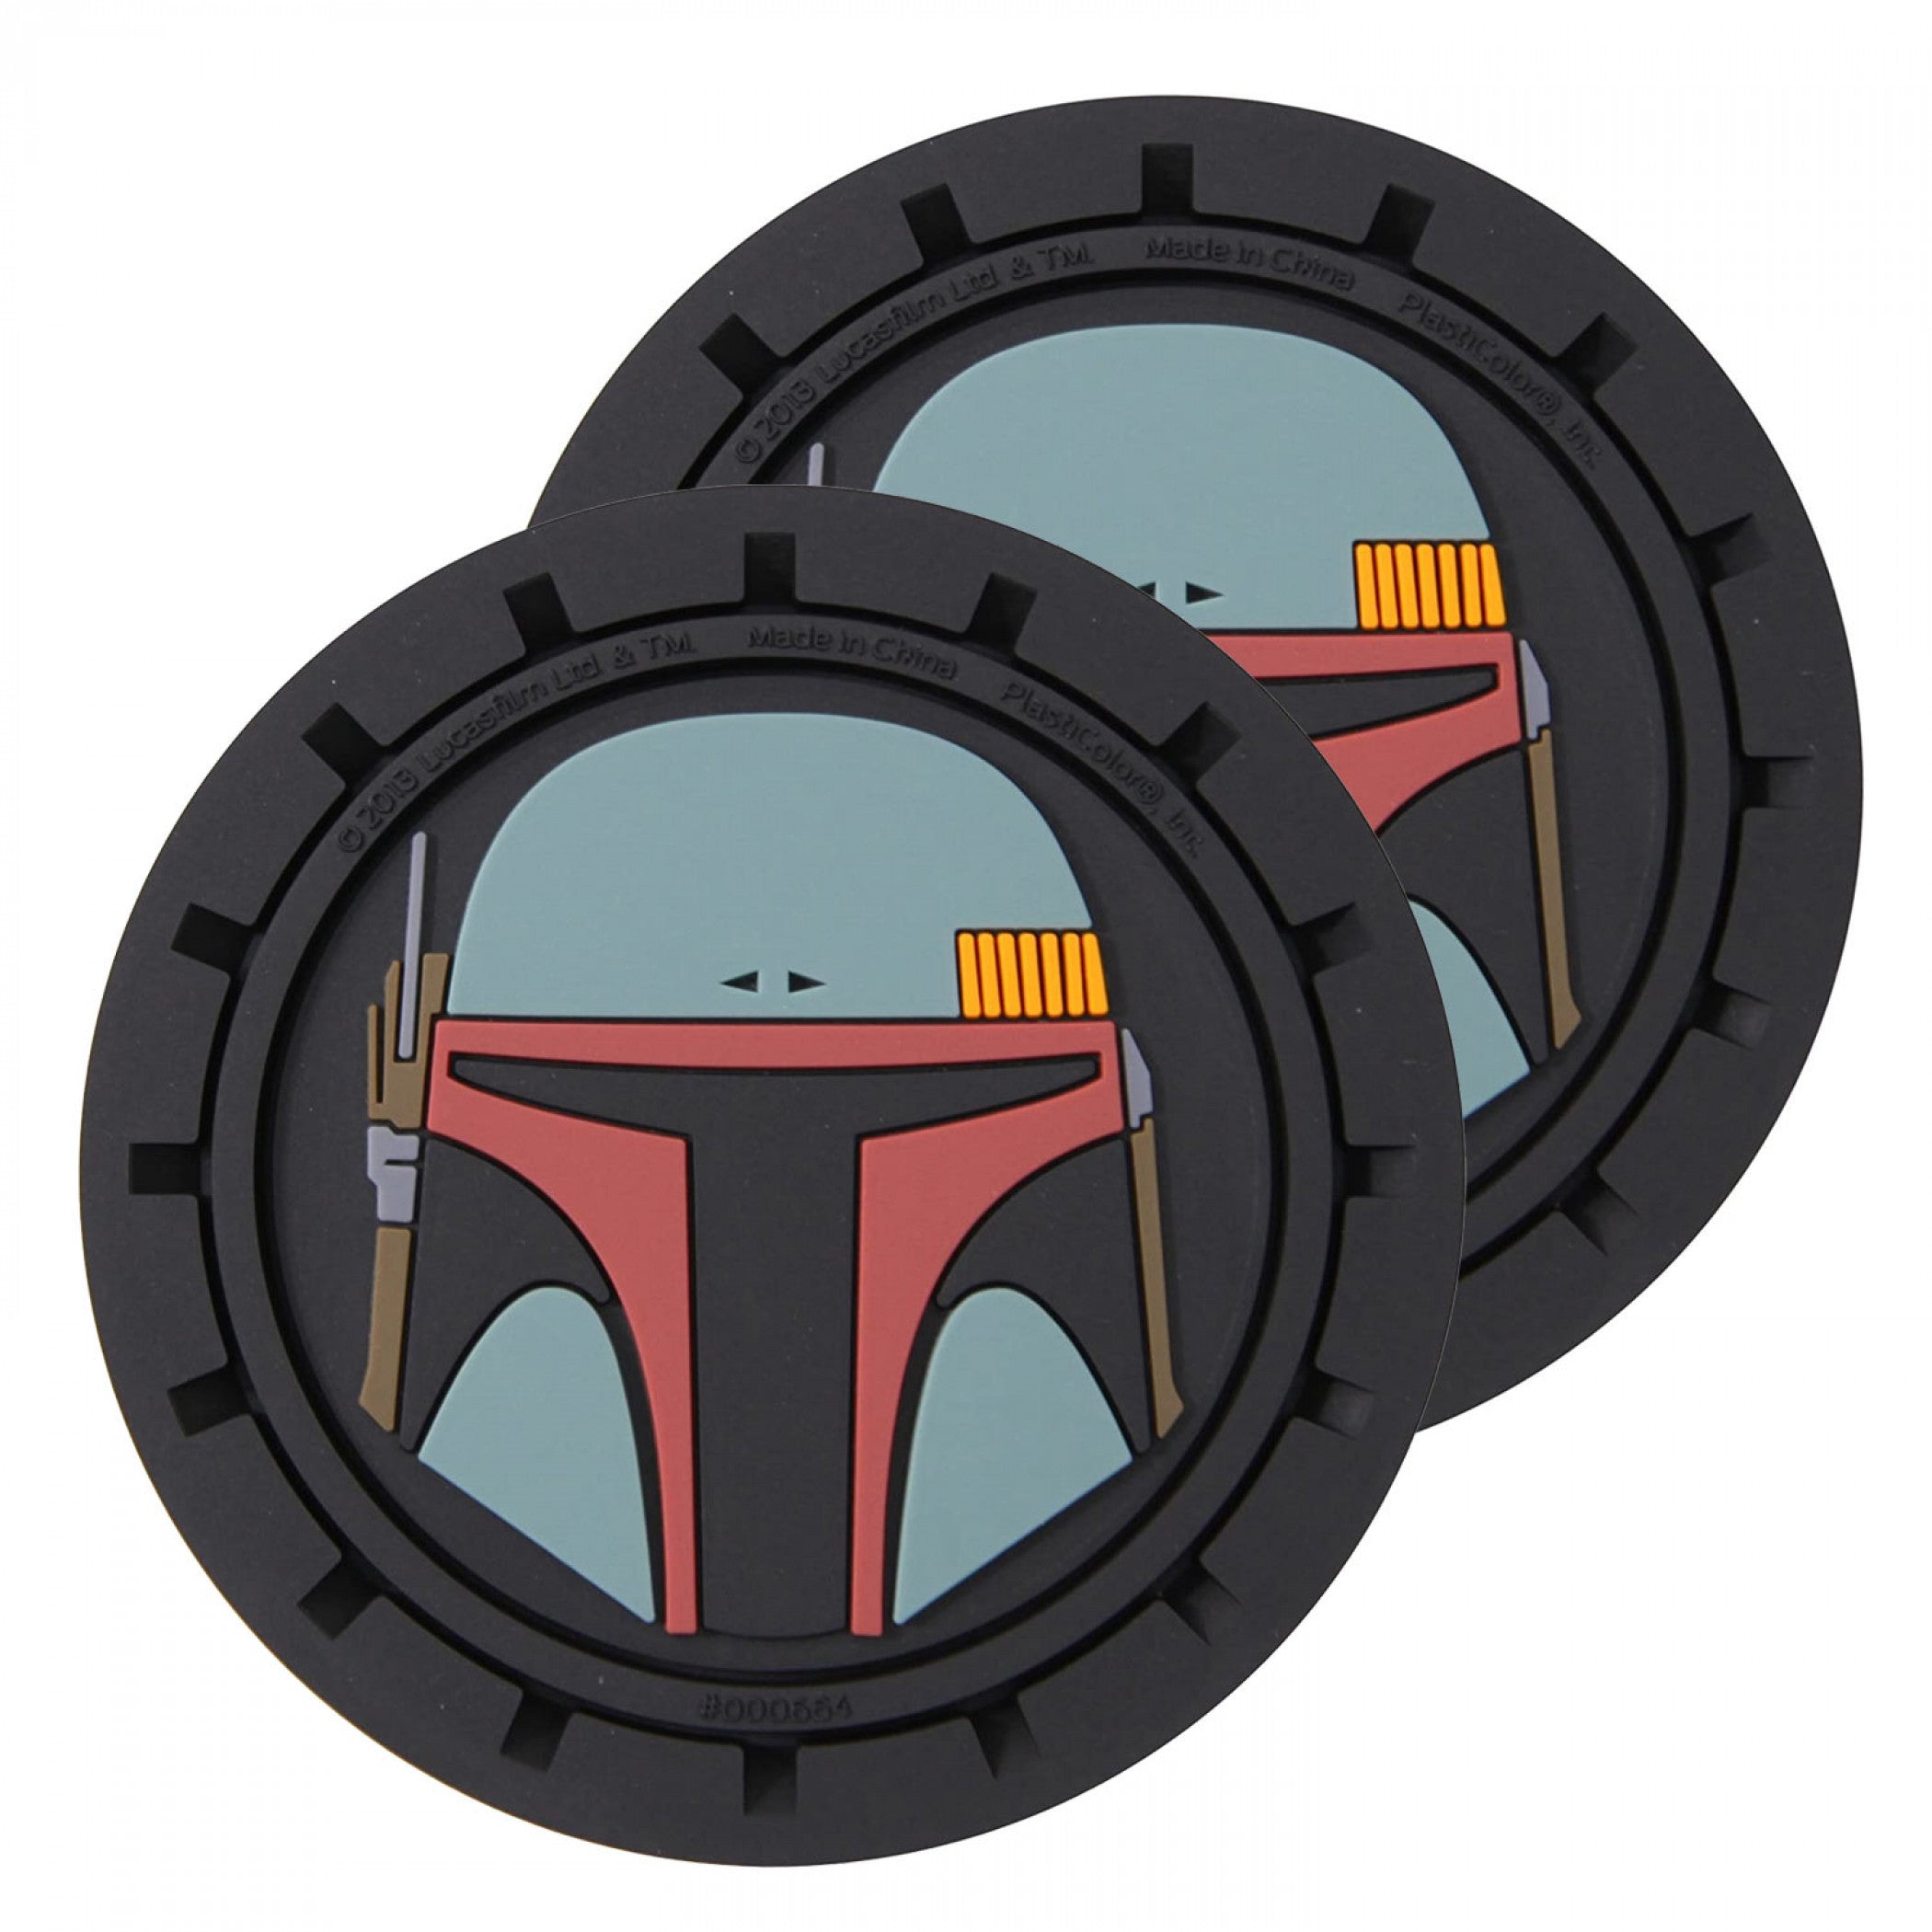 Star Wars Boba Fett Car Cup Holder Coaster 2-Pack